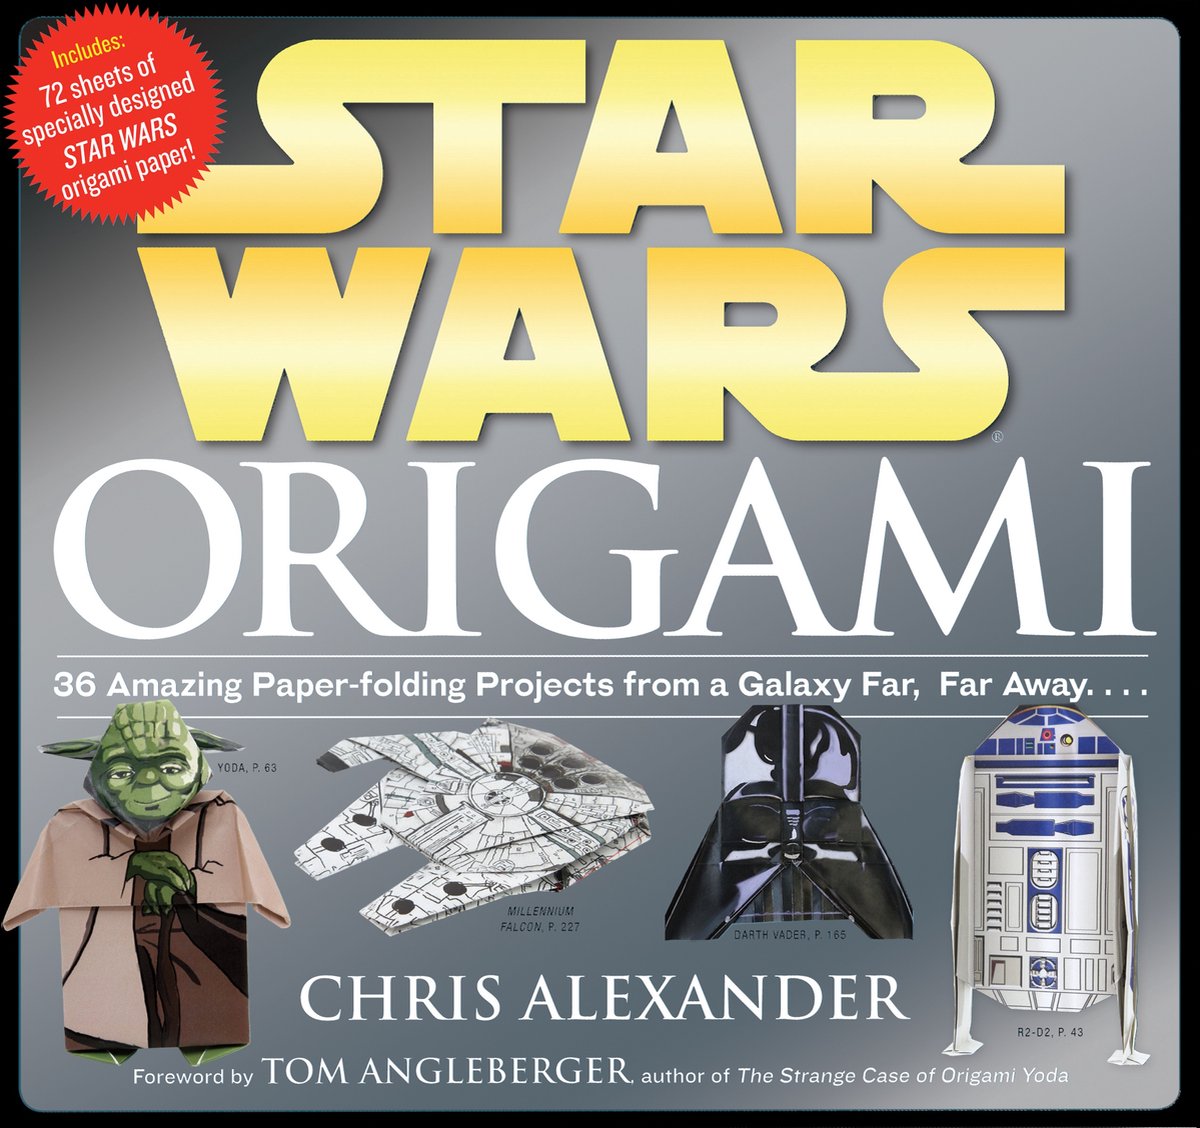 Star Wars Origami - Chris Alexander